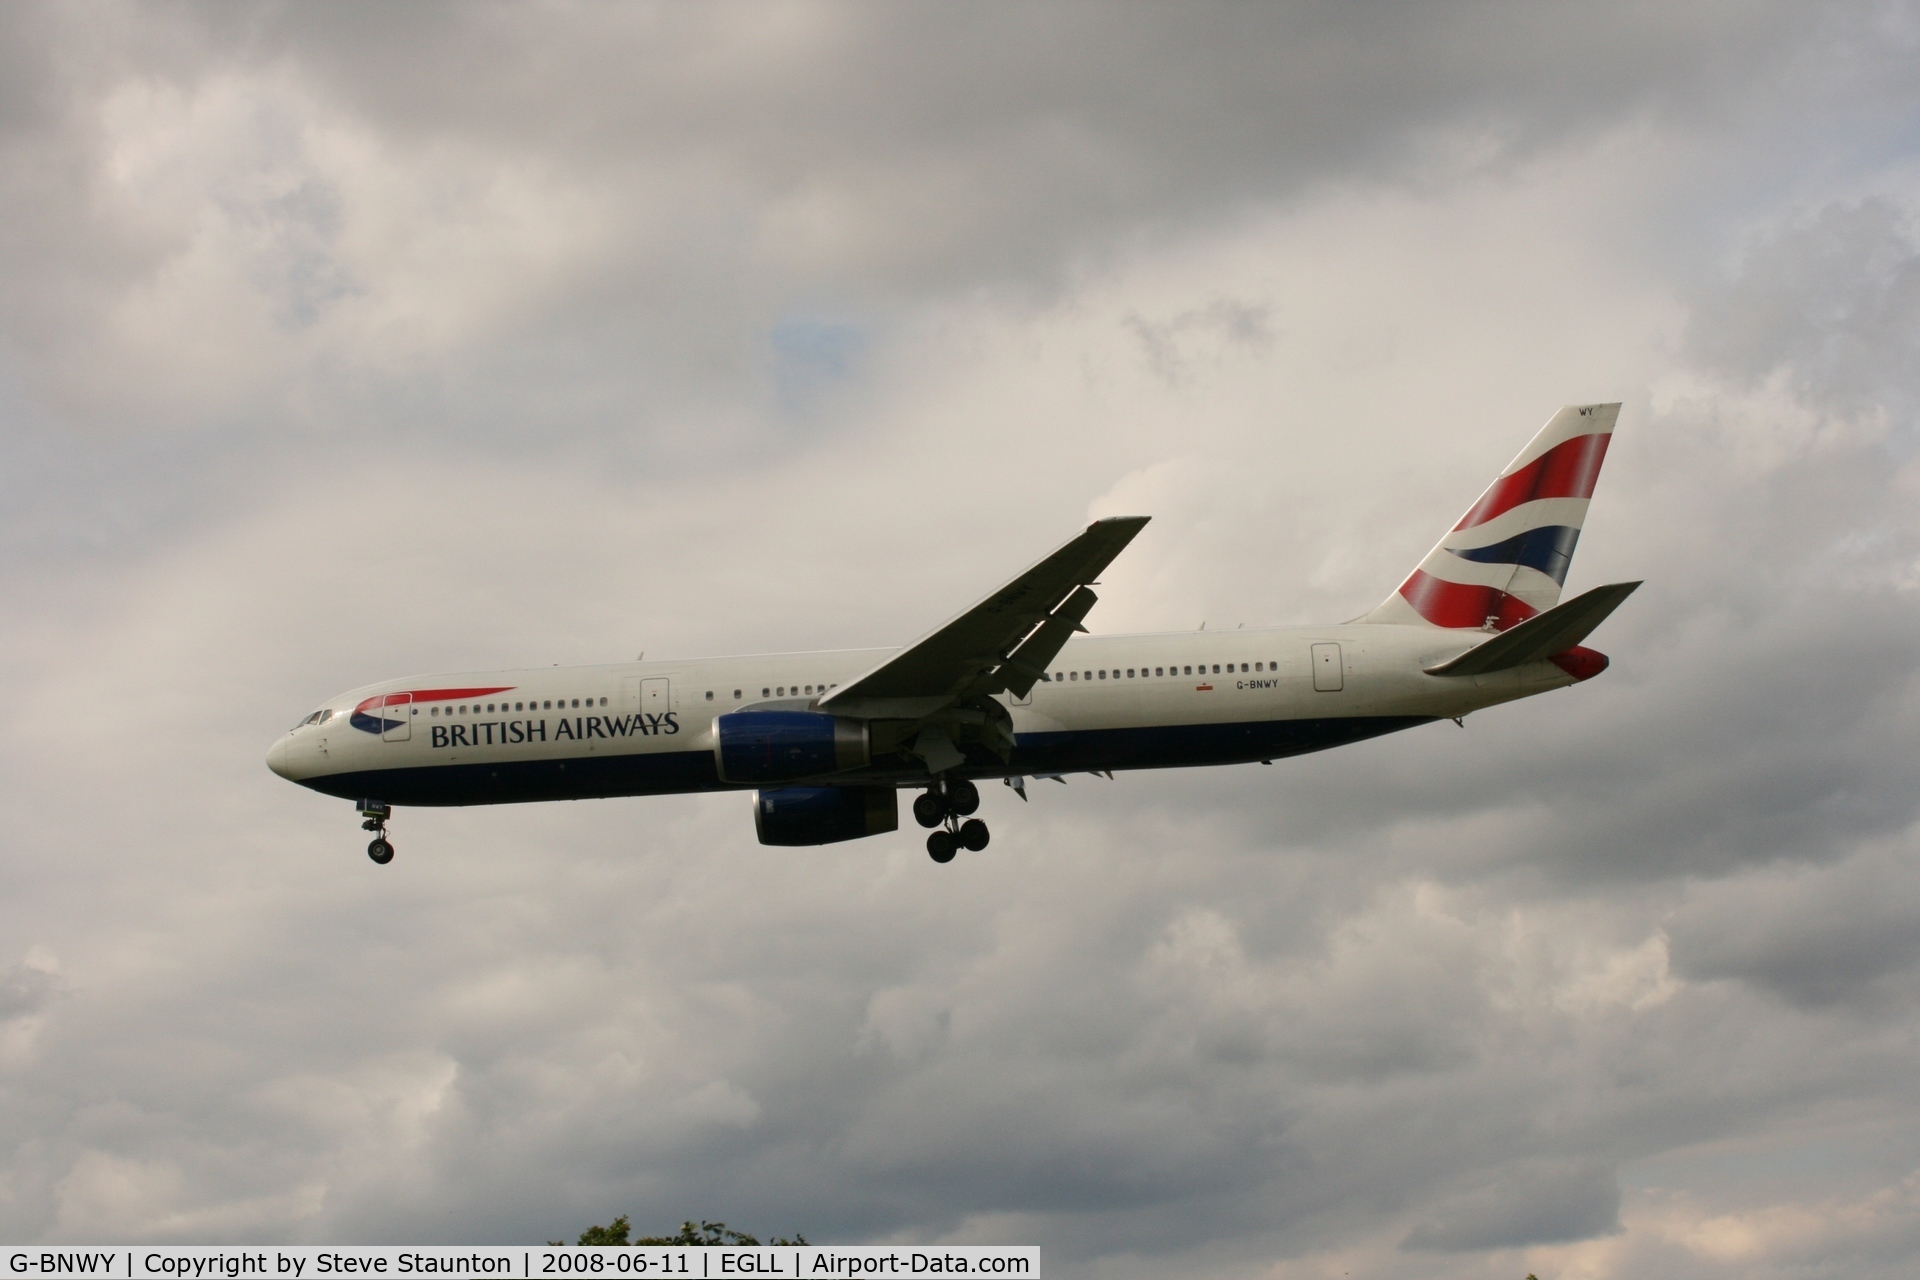 G-BNWY, 1996 Boeing 767-336 C/N 25834, Taken at London Heathrow 11th June 2008